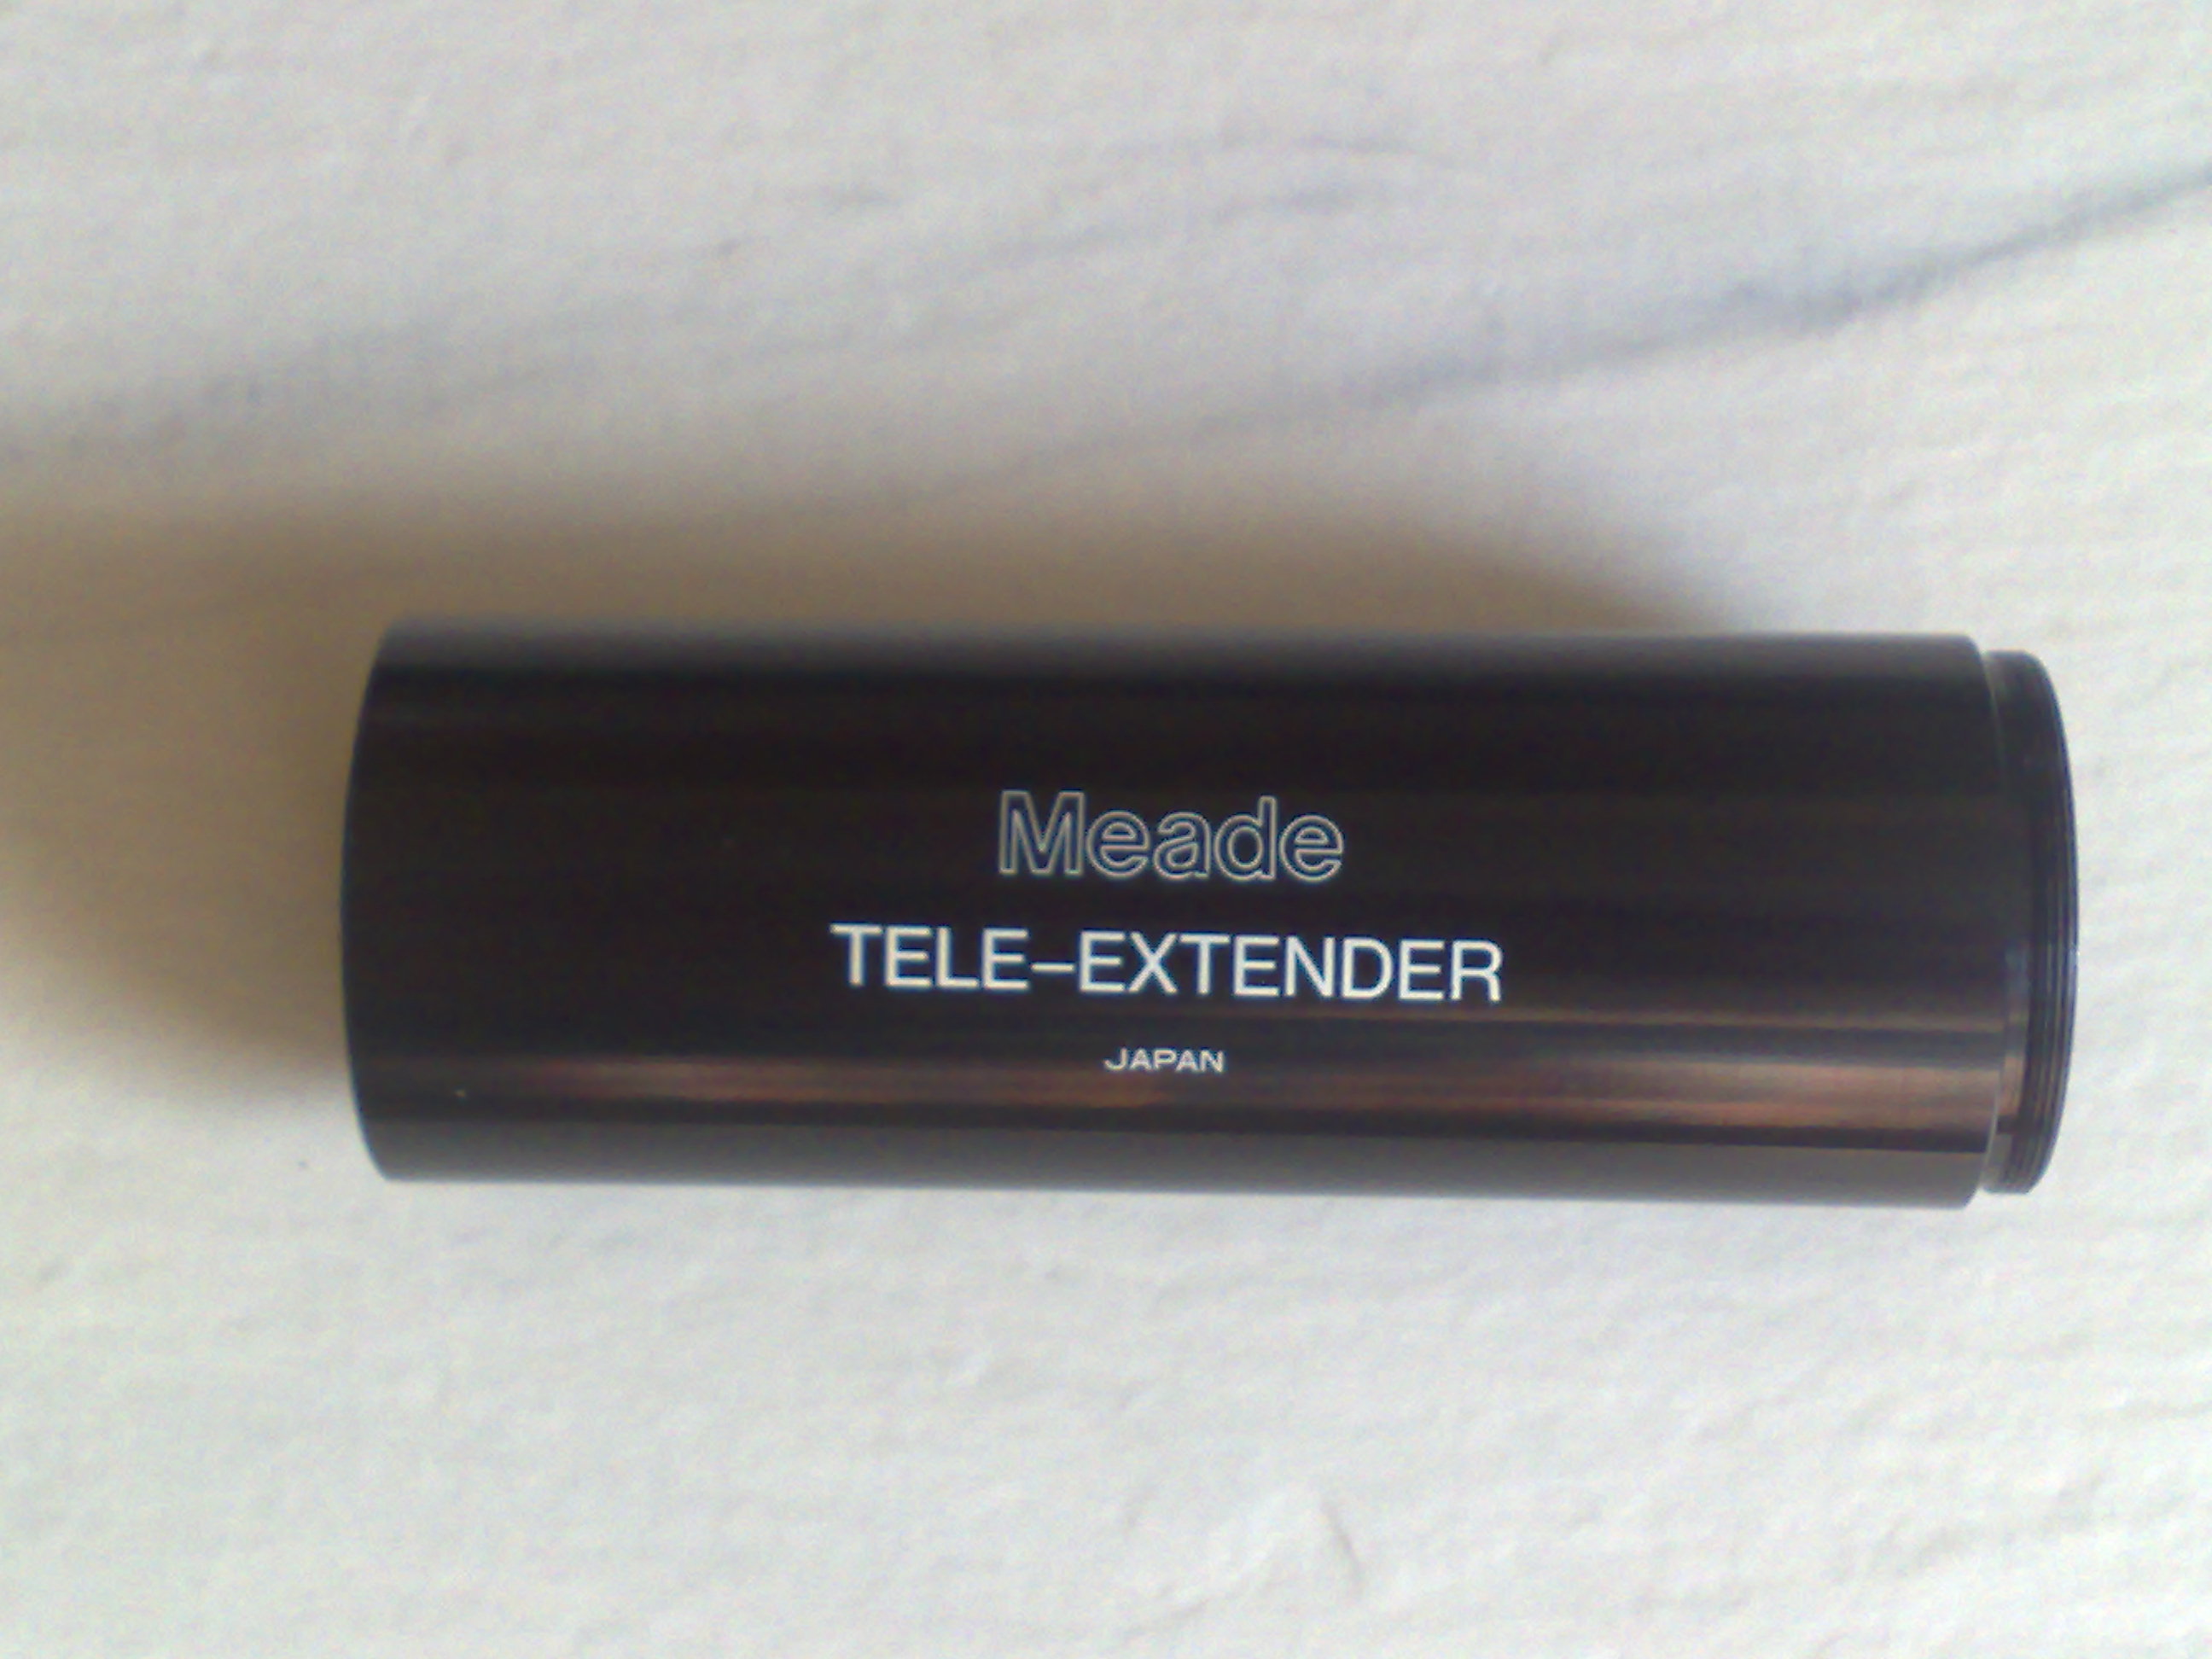 Meade Telextender